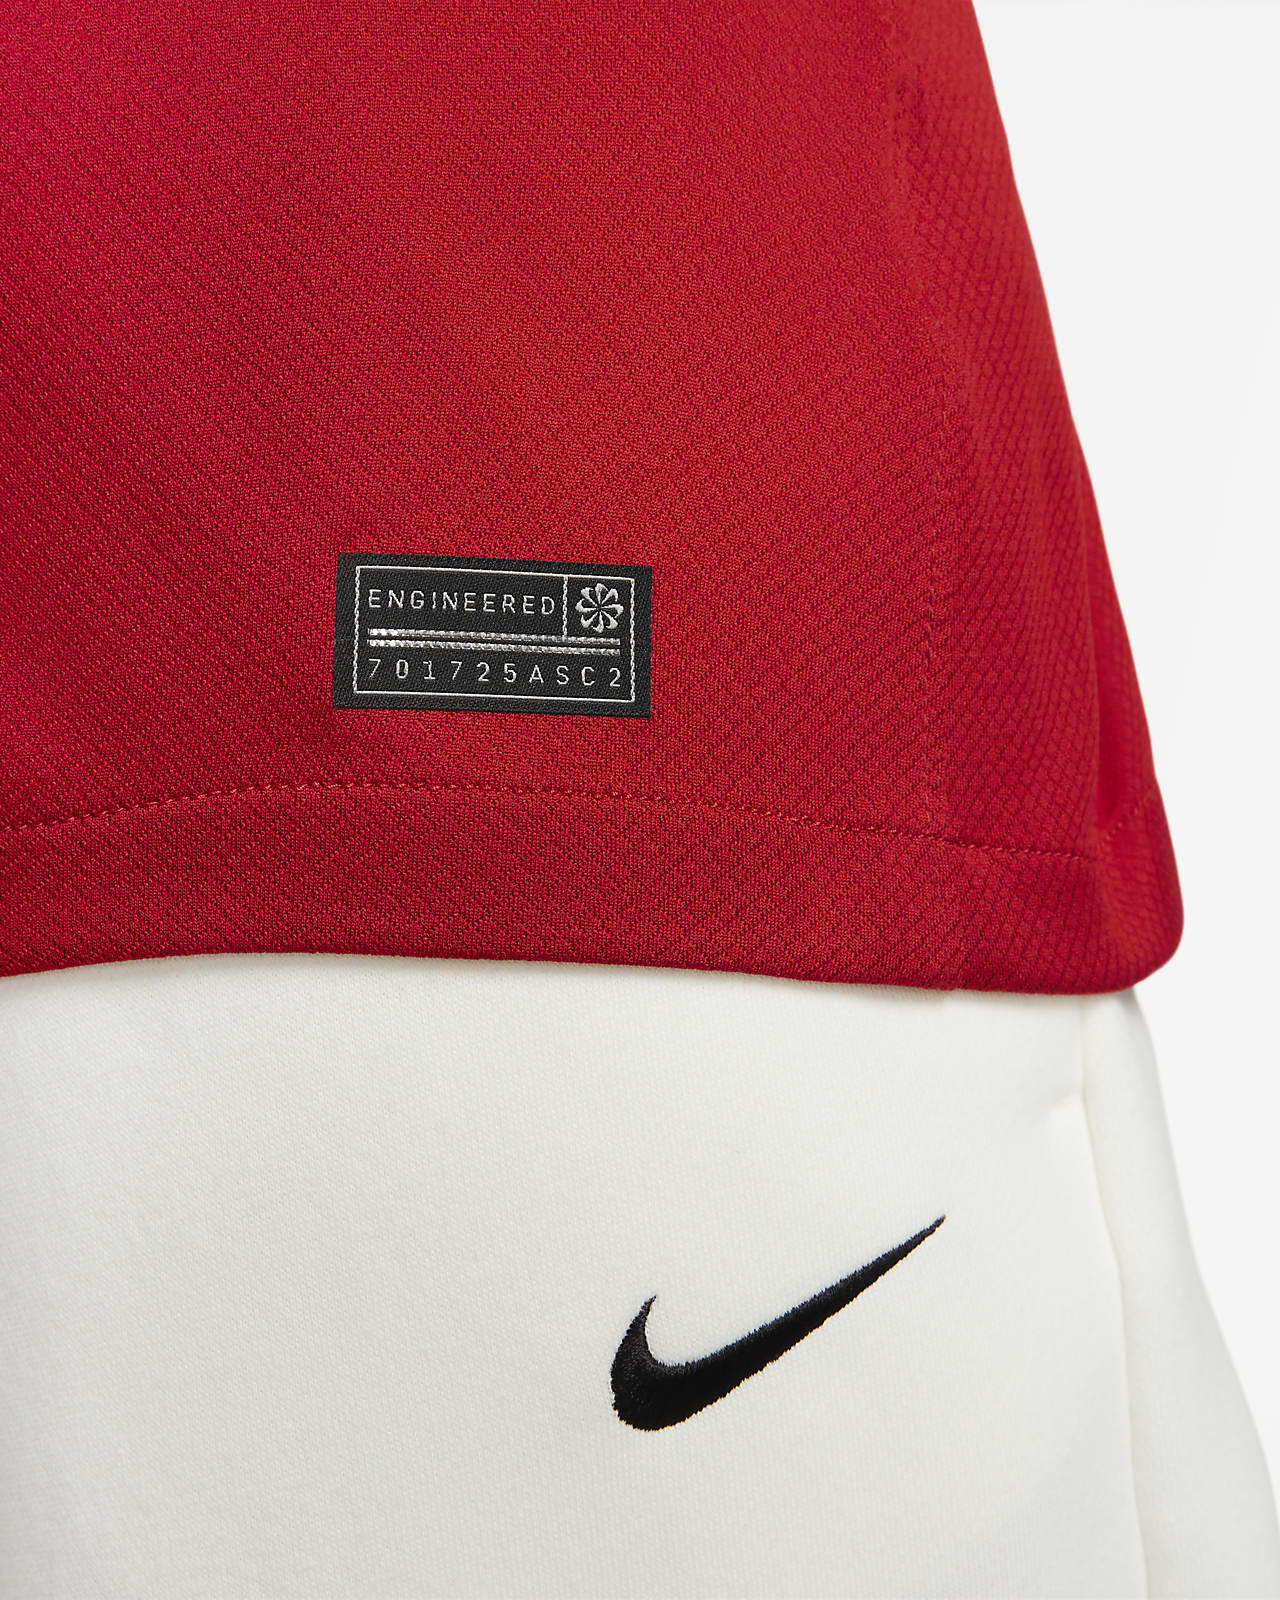 Liverpool Kit & Shirts 23/24. Nike LU